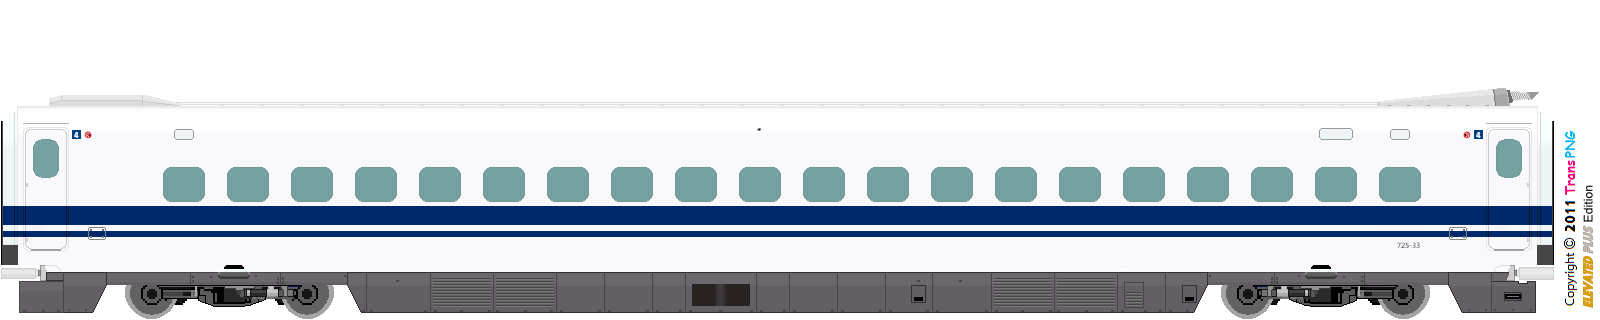 [9010] Central Japan Railway 52288069175_1b4762b56e_o